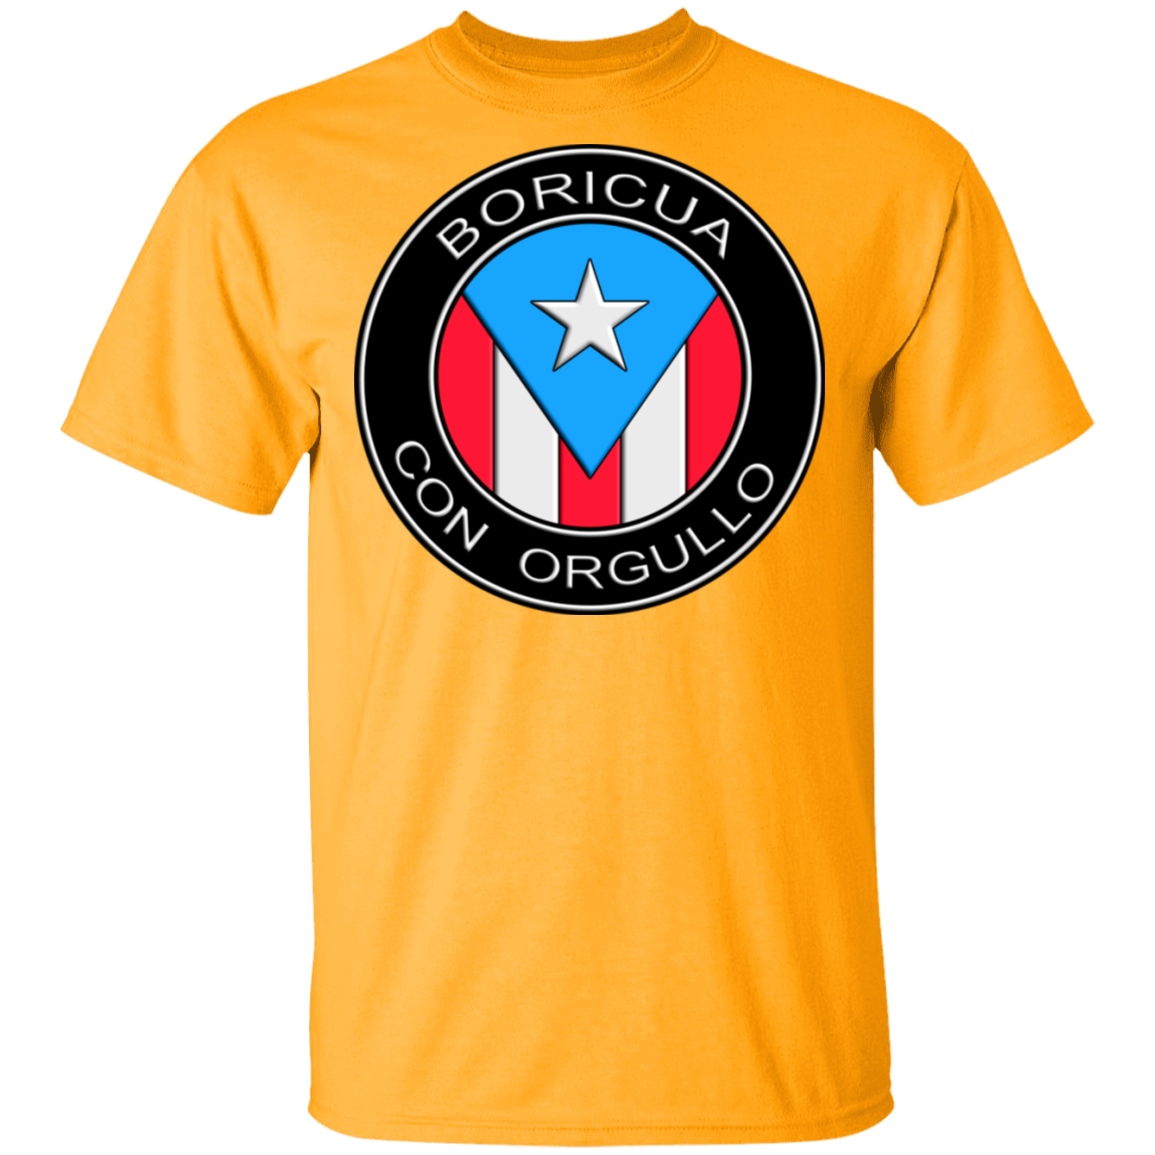 Boricu Con Orgullo 5.3 oz. T-Shirt - Puerto Rican Pride